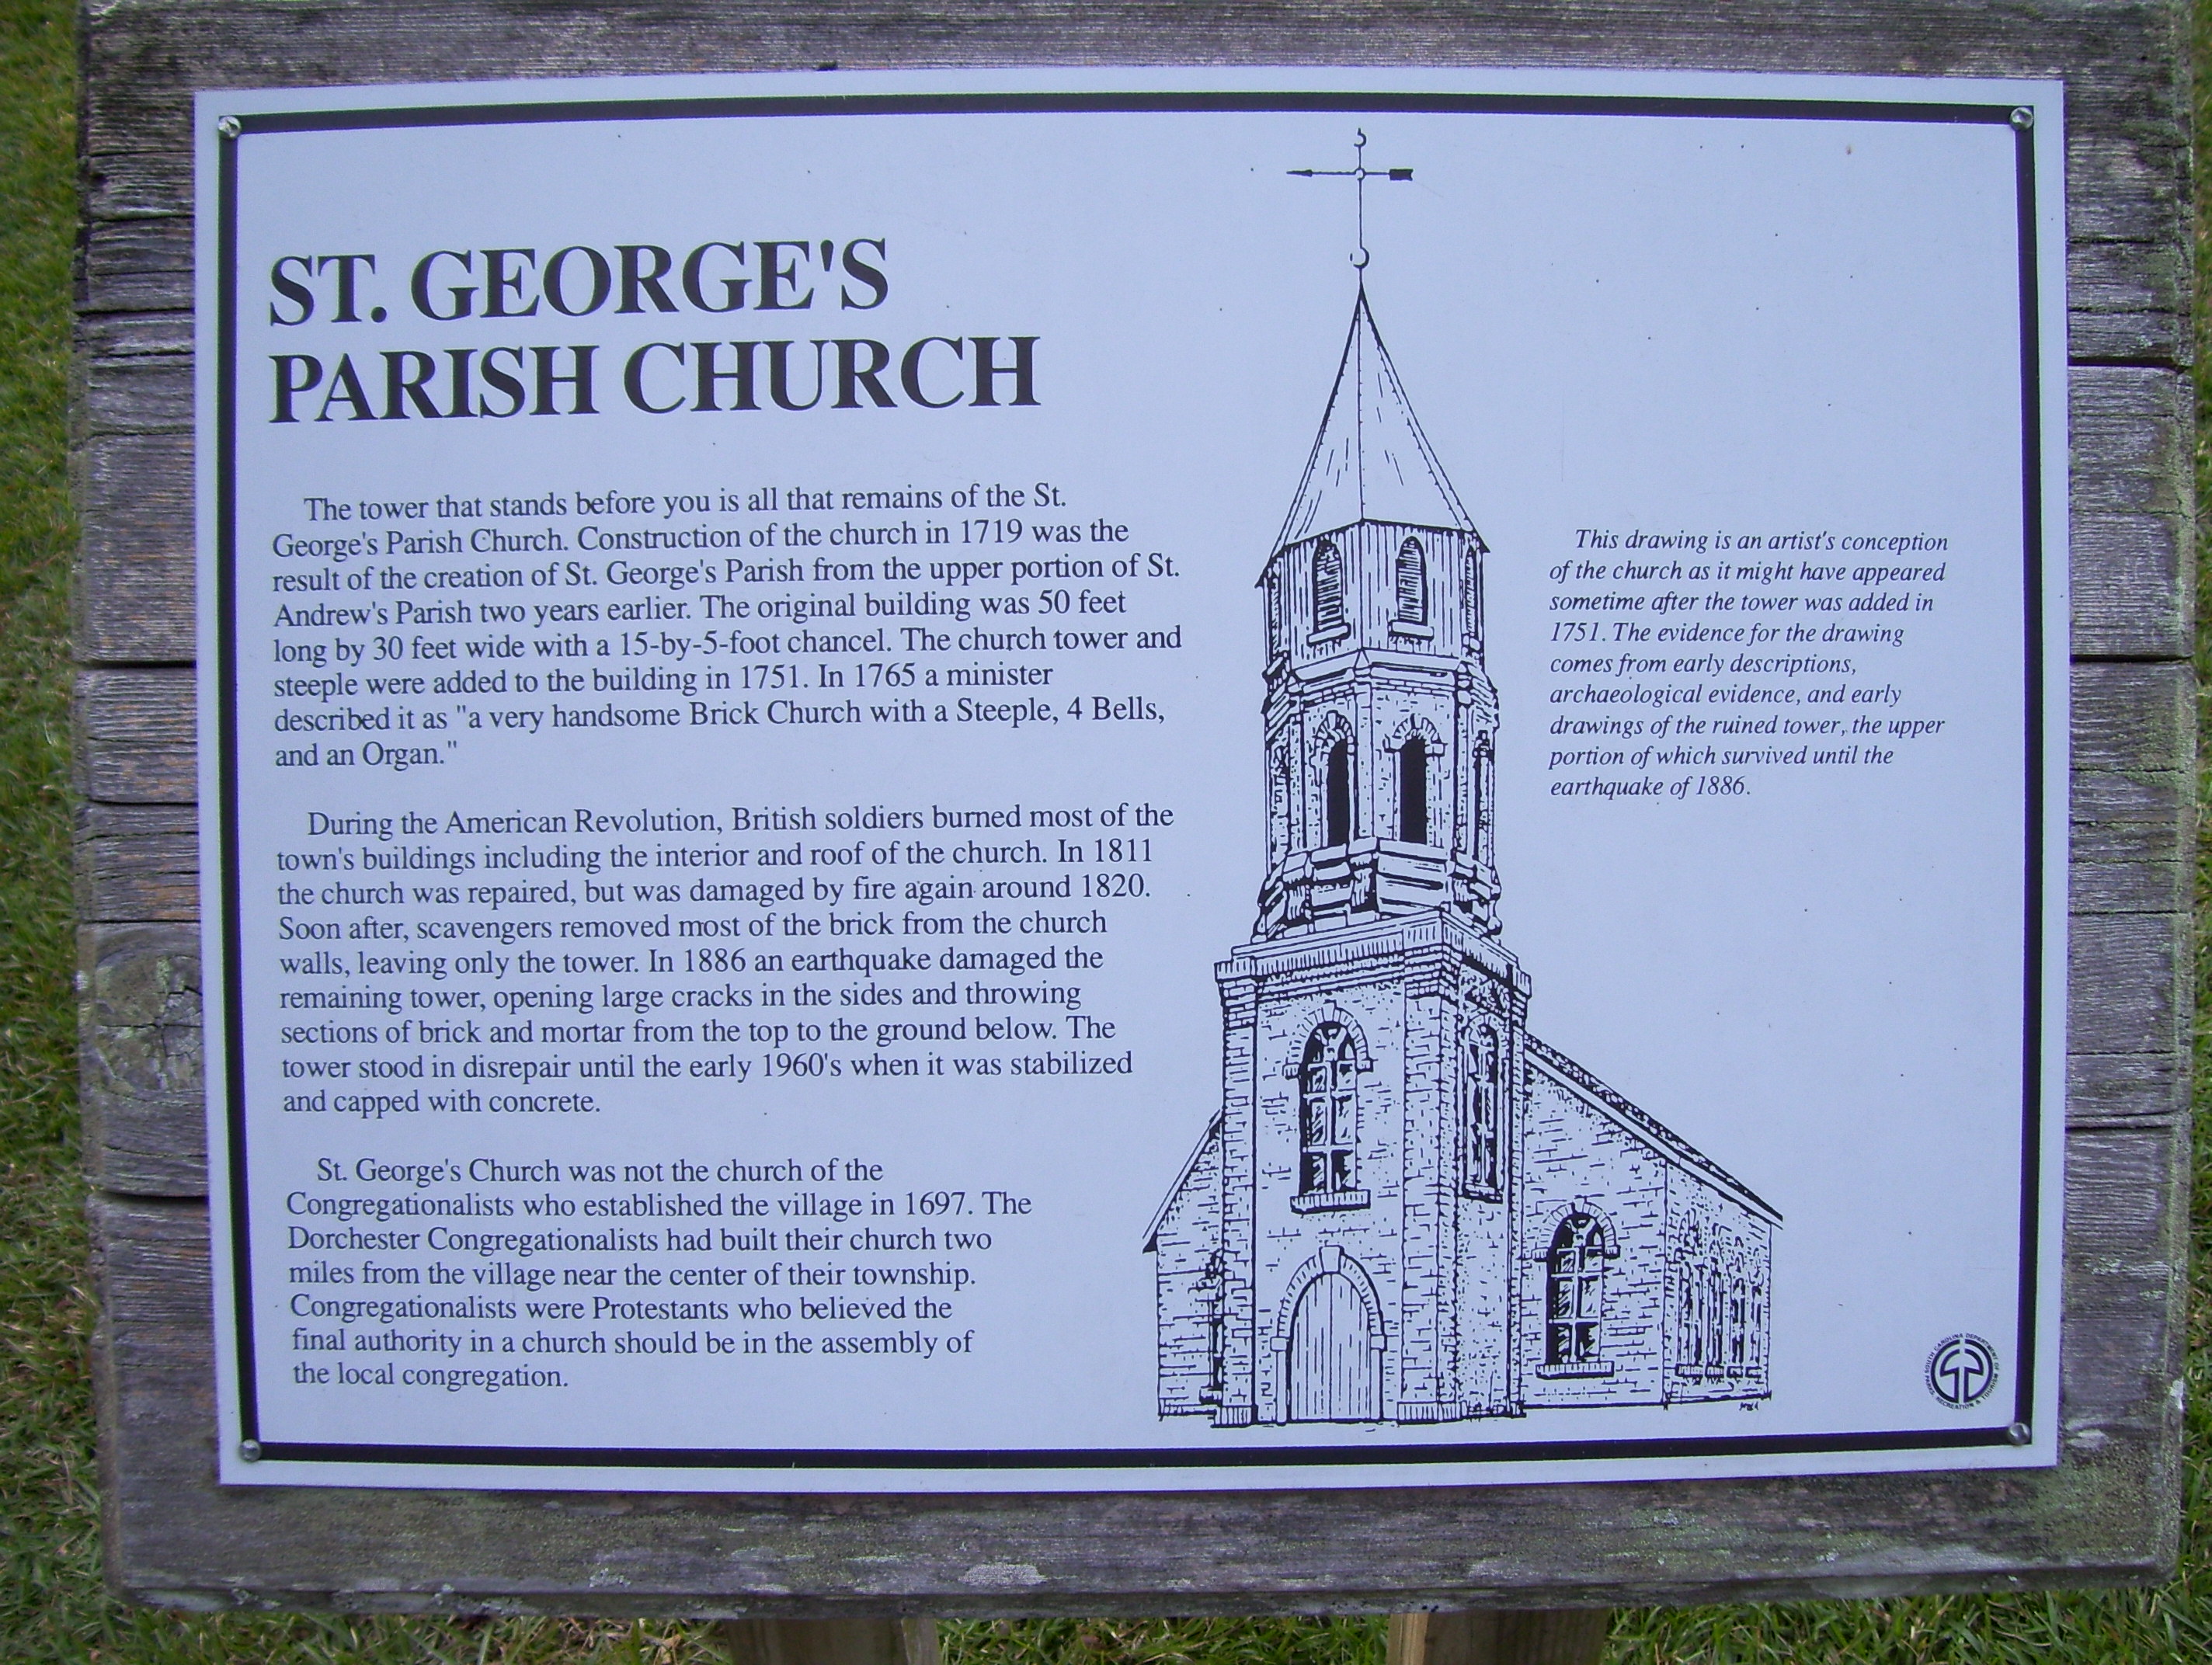 St. George's Parish Church 1719-